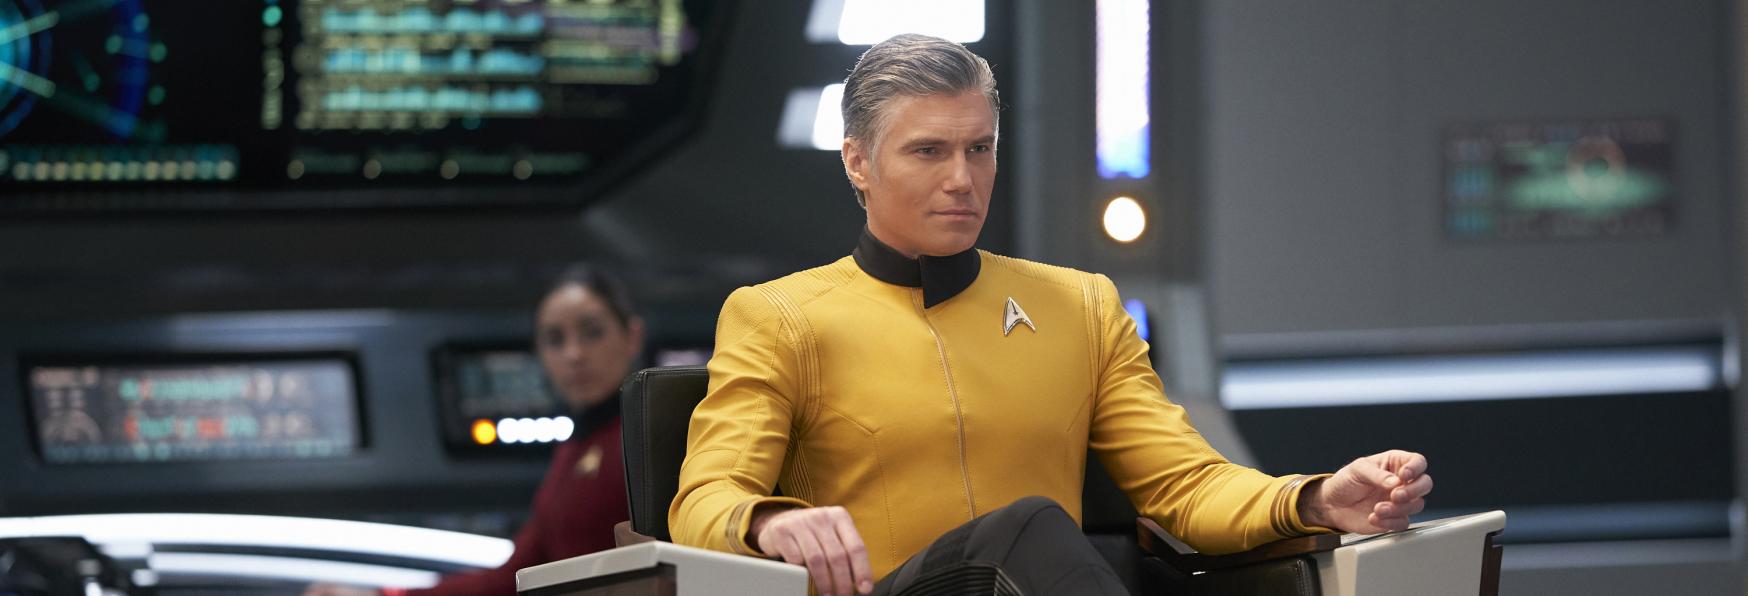 Star Trek: Strange New Worlds - Paramount+ condivide il Teaser Trailer della nuova Serie TV